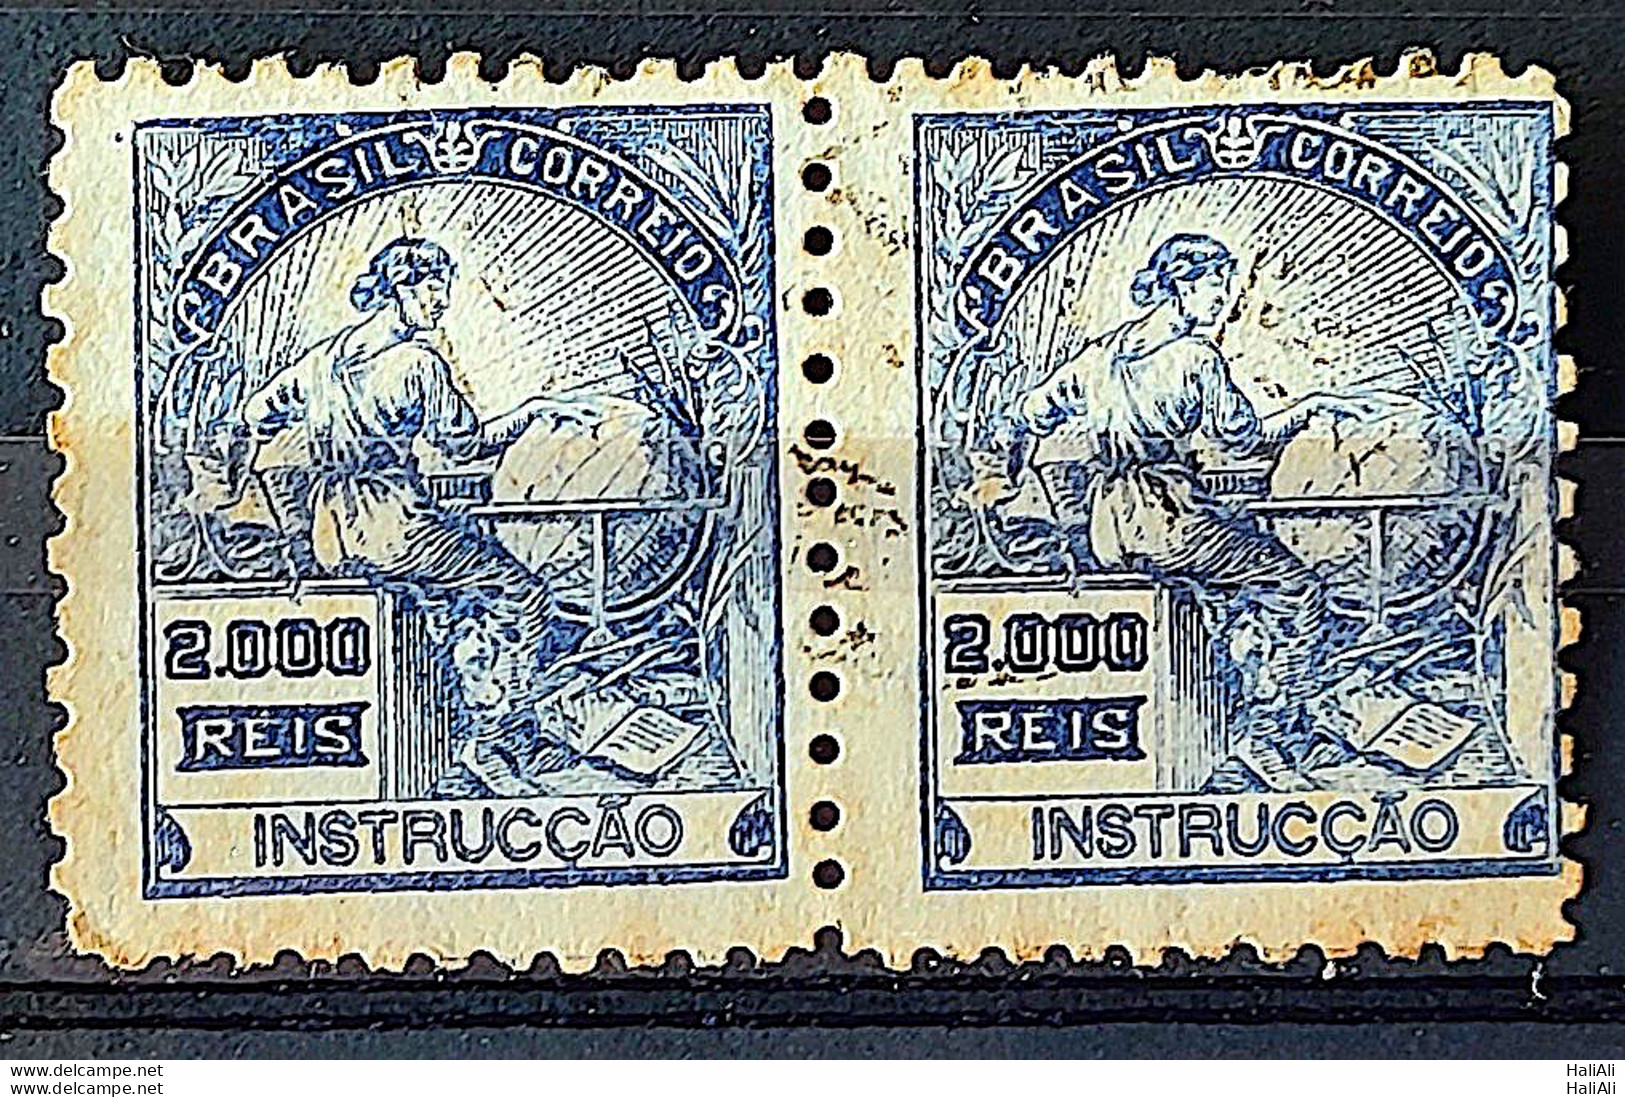 Brazil Regular Stamp Cod Rhm 308 Grandma Instruction 2000 Reis Filigree N 1936 Pair Circulated 2 - Oblitérés